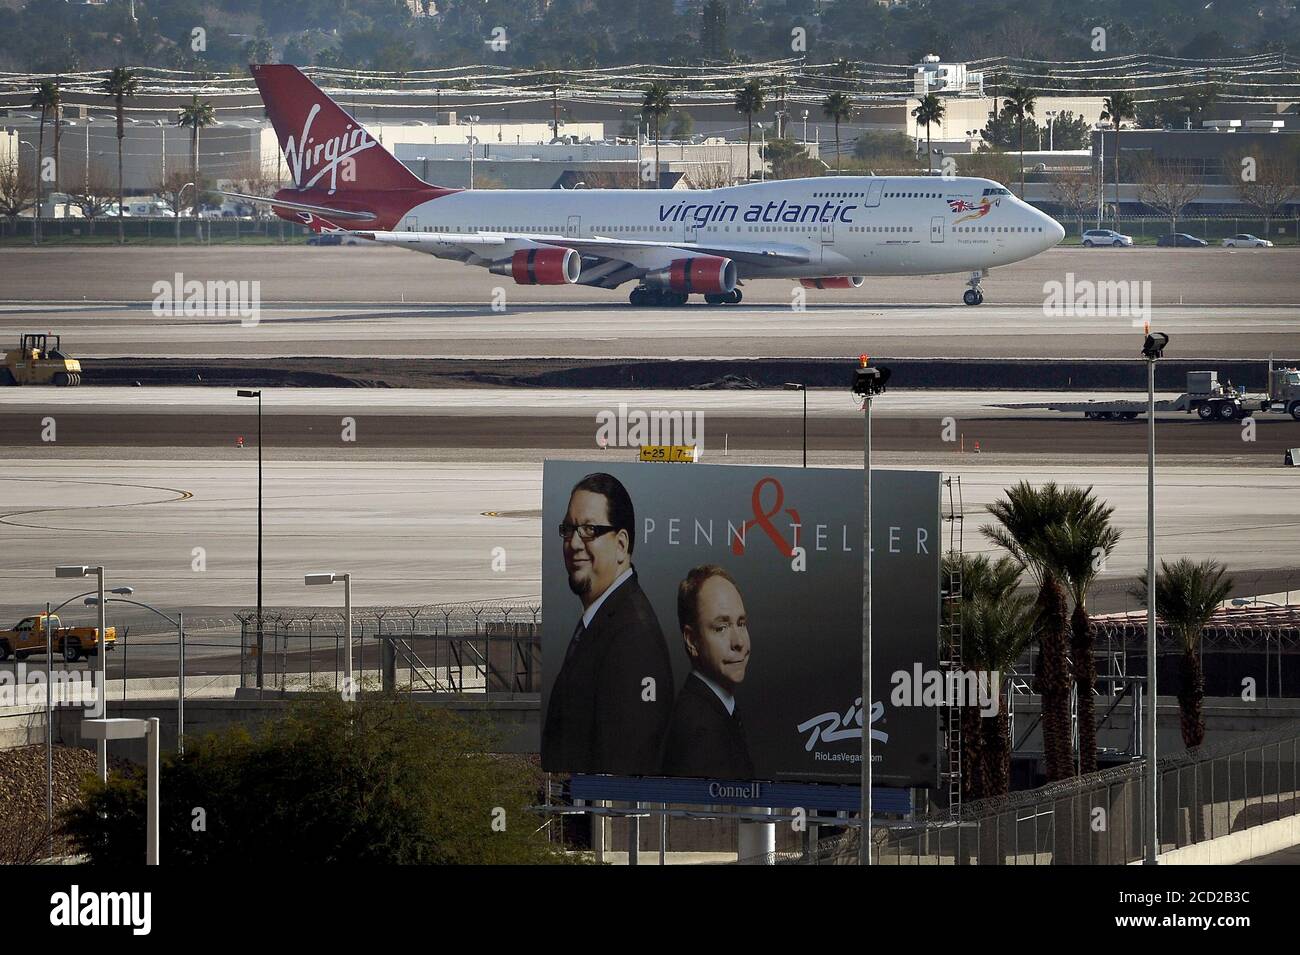 Las Vegas, Nevada, USA. 12th Jan, 2015. A Virgin Atlantic passenger aircraft - Boeing 747 - taxis at McCarran International Airport on January 12, 2015, in Las Vegas, Nevada. Credit: David Becker/ZUMA Wire/Alamy Live News Stock Photo